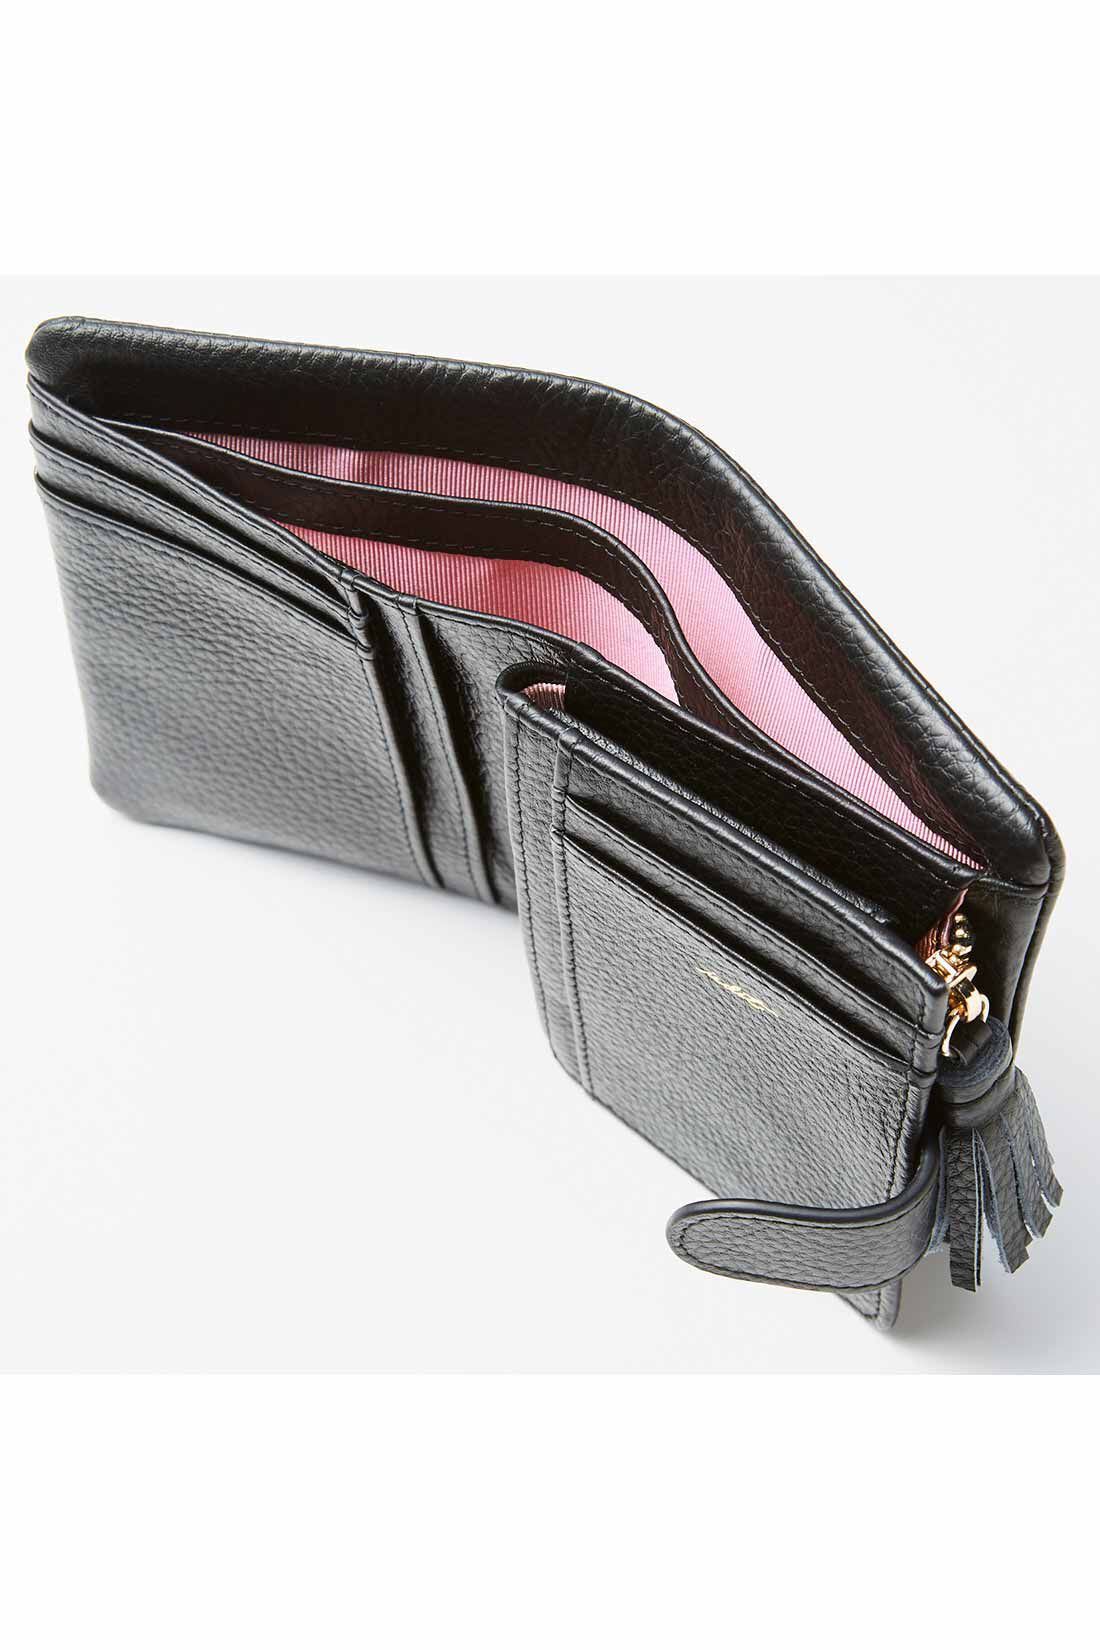 IEDIT|IEDIT[イディット]　くったり本革素材できれいめ二つ折り財布〈ブラック〉|2部屋に分かれたお札入れは、レシートの整理にも。